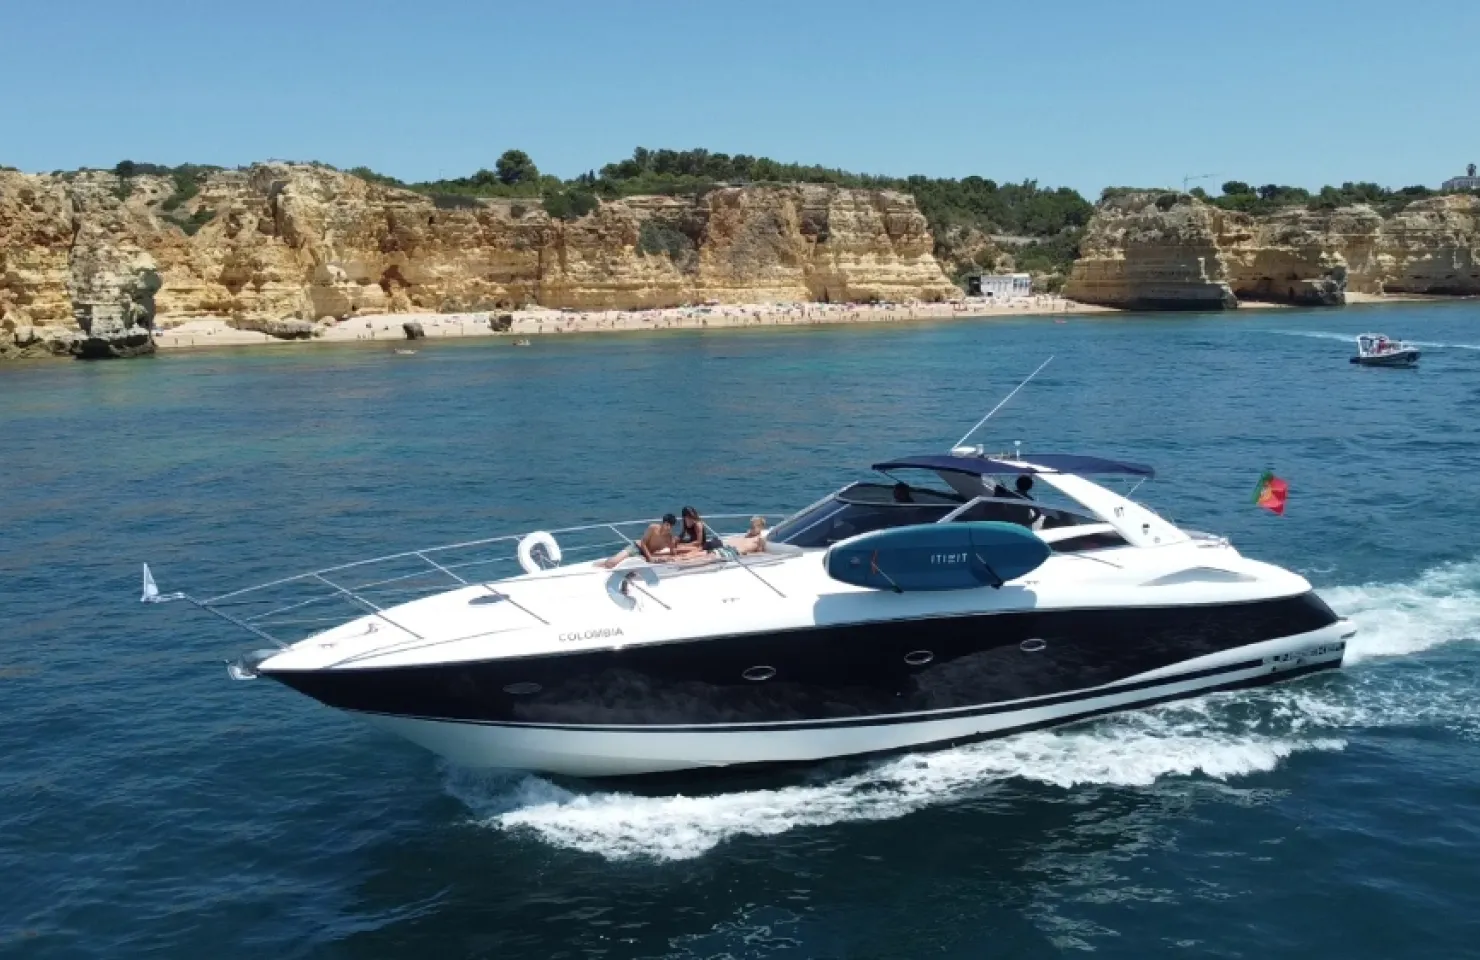 Algarve Yacht Charter - Vilamoura Boat Trip